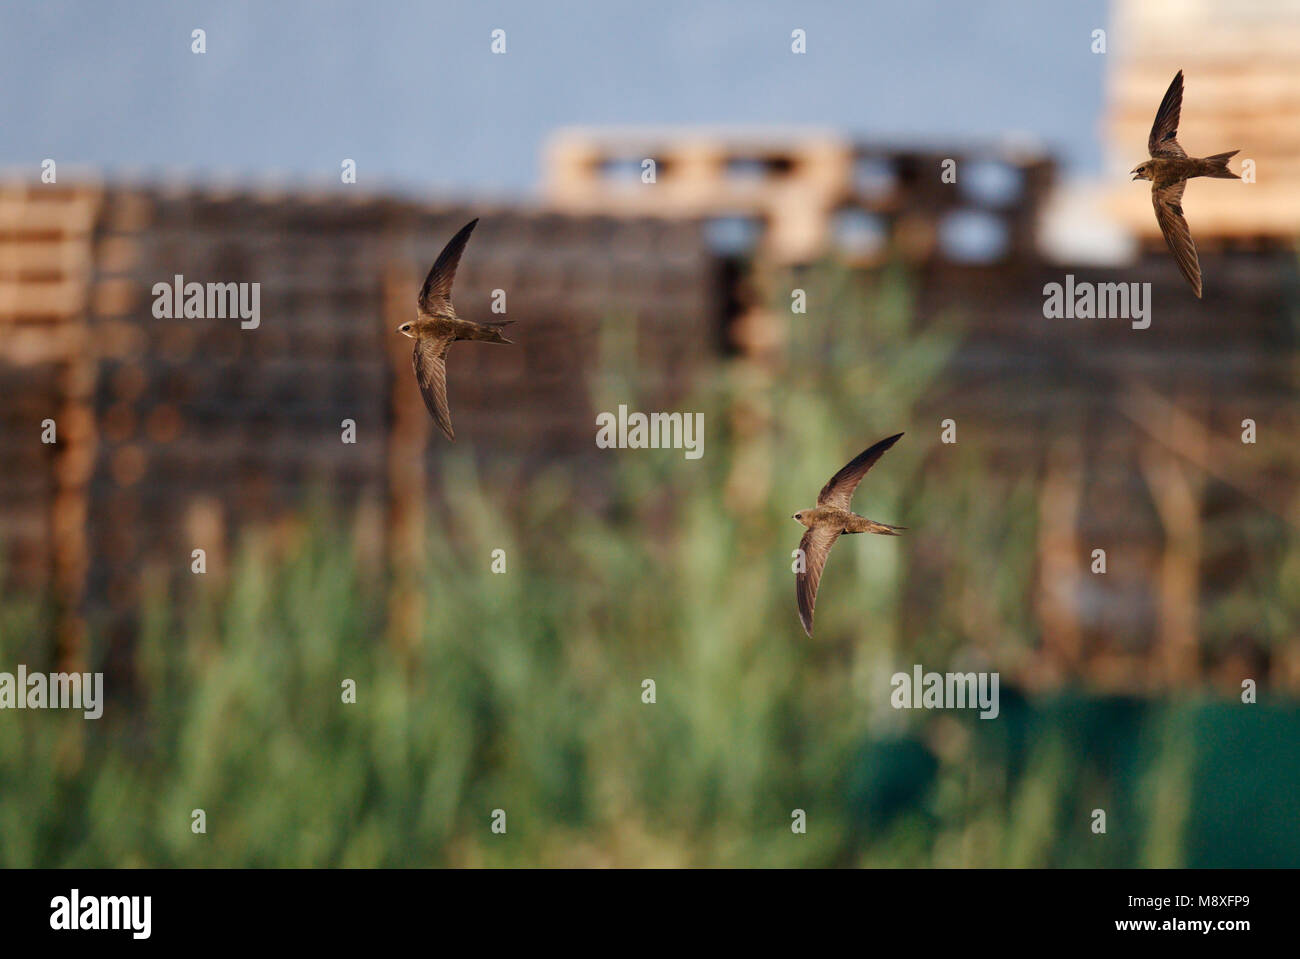 Groepje van drie vliegende en gierende en roepende Vale Gierzwaluwen in bovenaanzicht;Flock of calling Flying Pallid Swifts Stock Photo